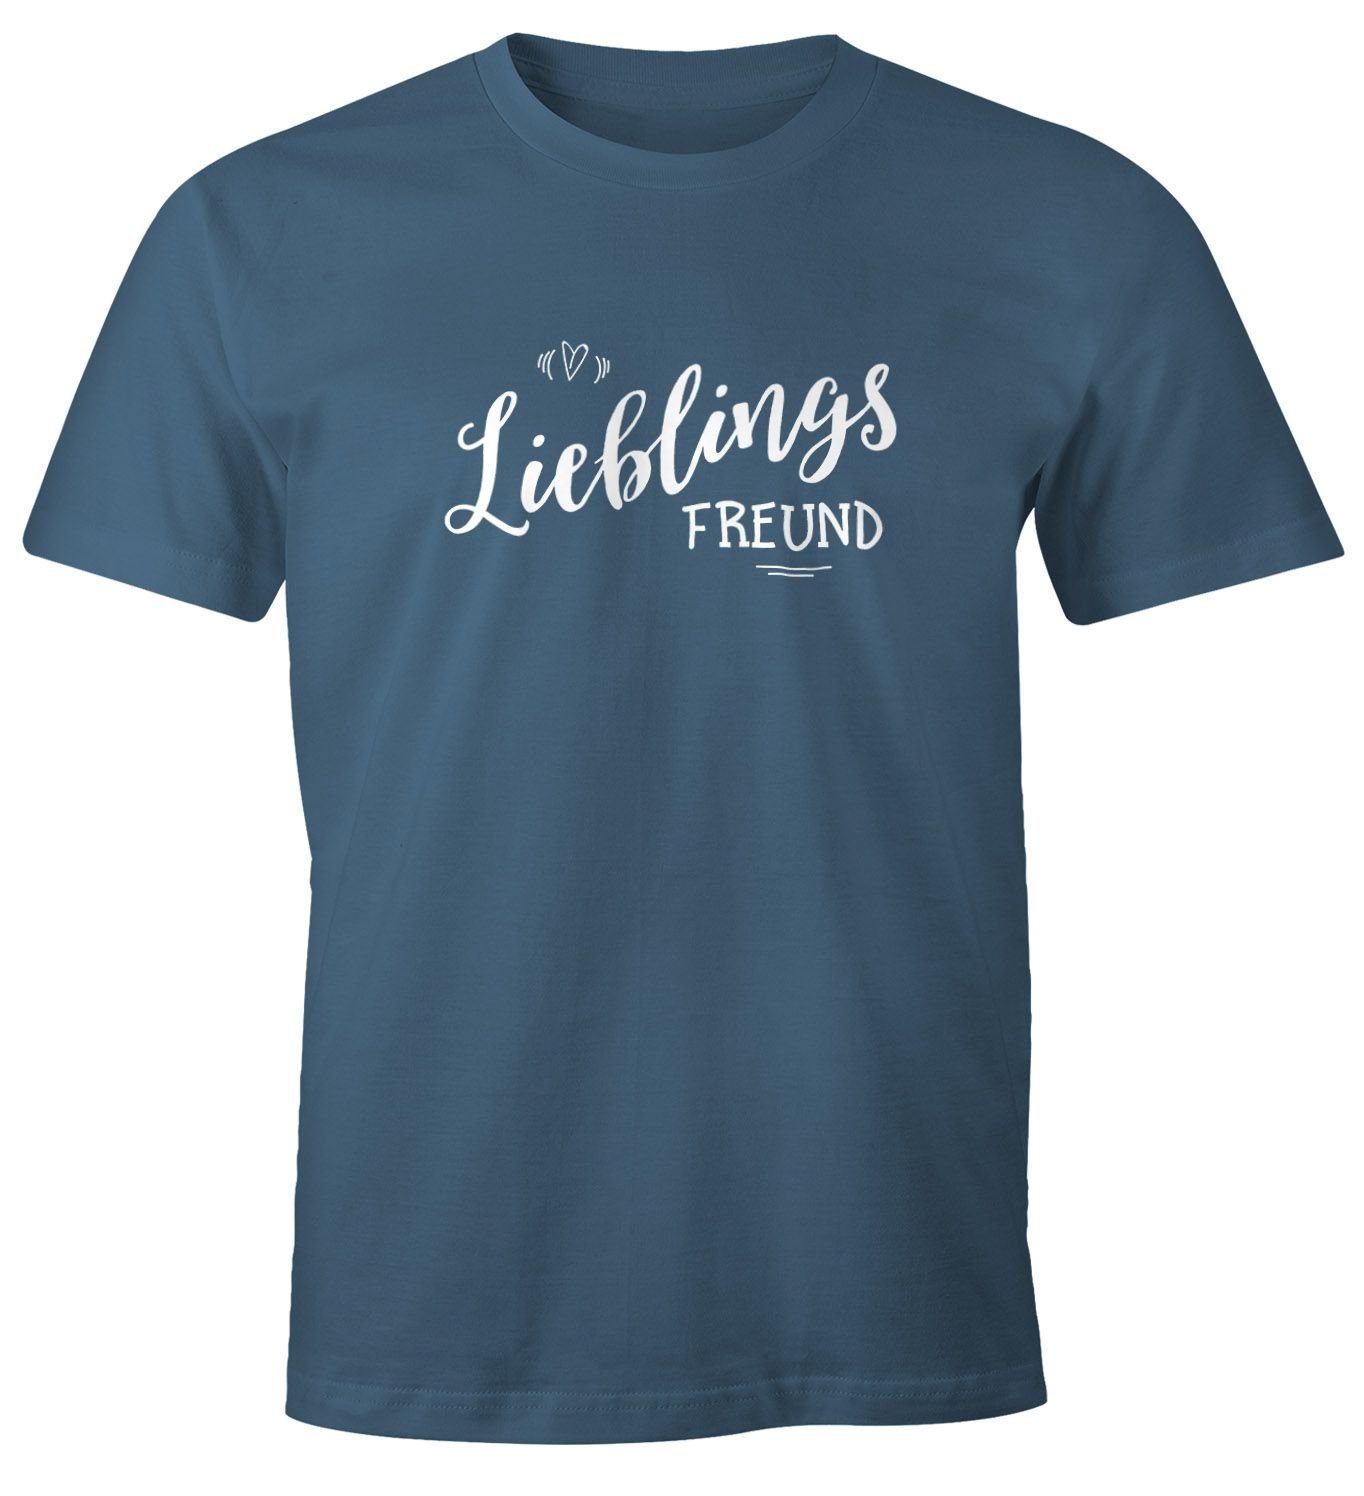 MoonWorks Print-Shirt Liebe Lieblingsfreund Partner Print T-Shirt Moonworks® Geschenk blau mit Freundschaft Freund Herren